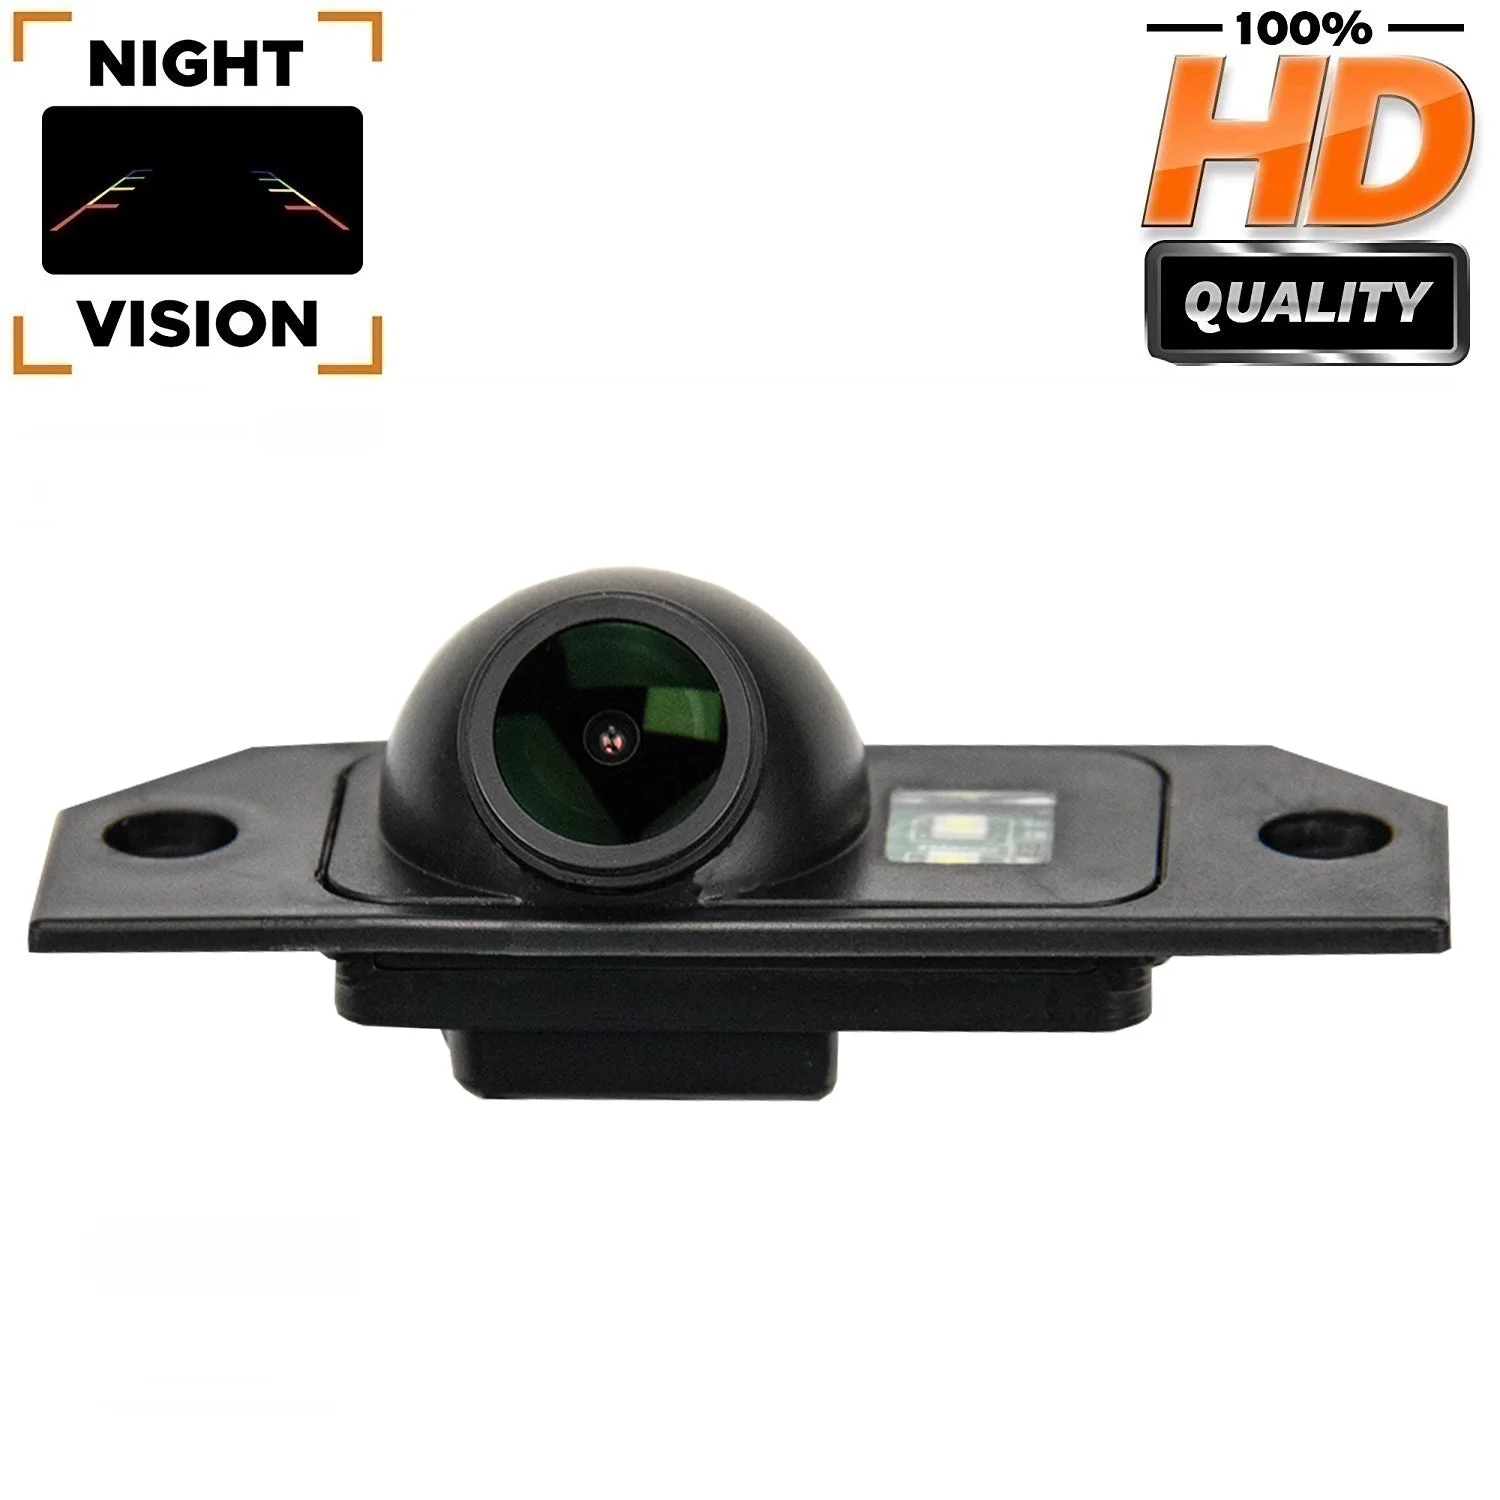 

HD 1280*720p Plate Light License Rear View Camera for FORD Focus Sedan/ C-MAX /MONDEO,Reversing Backup Night Vision Camera